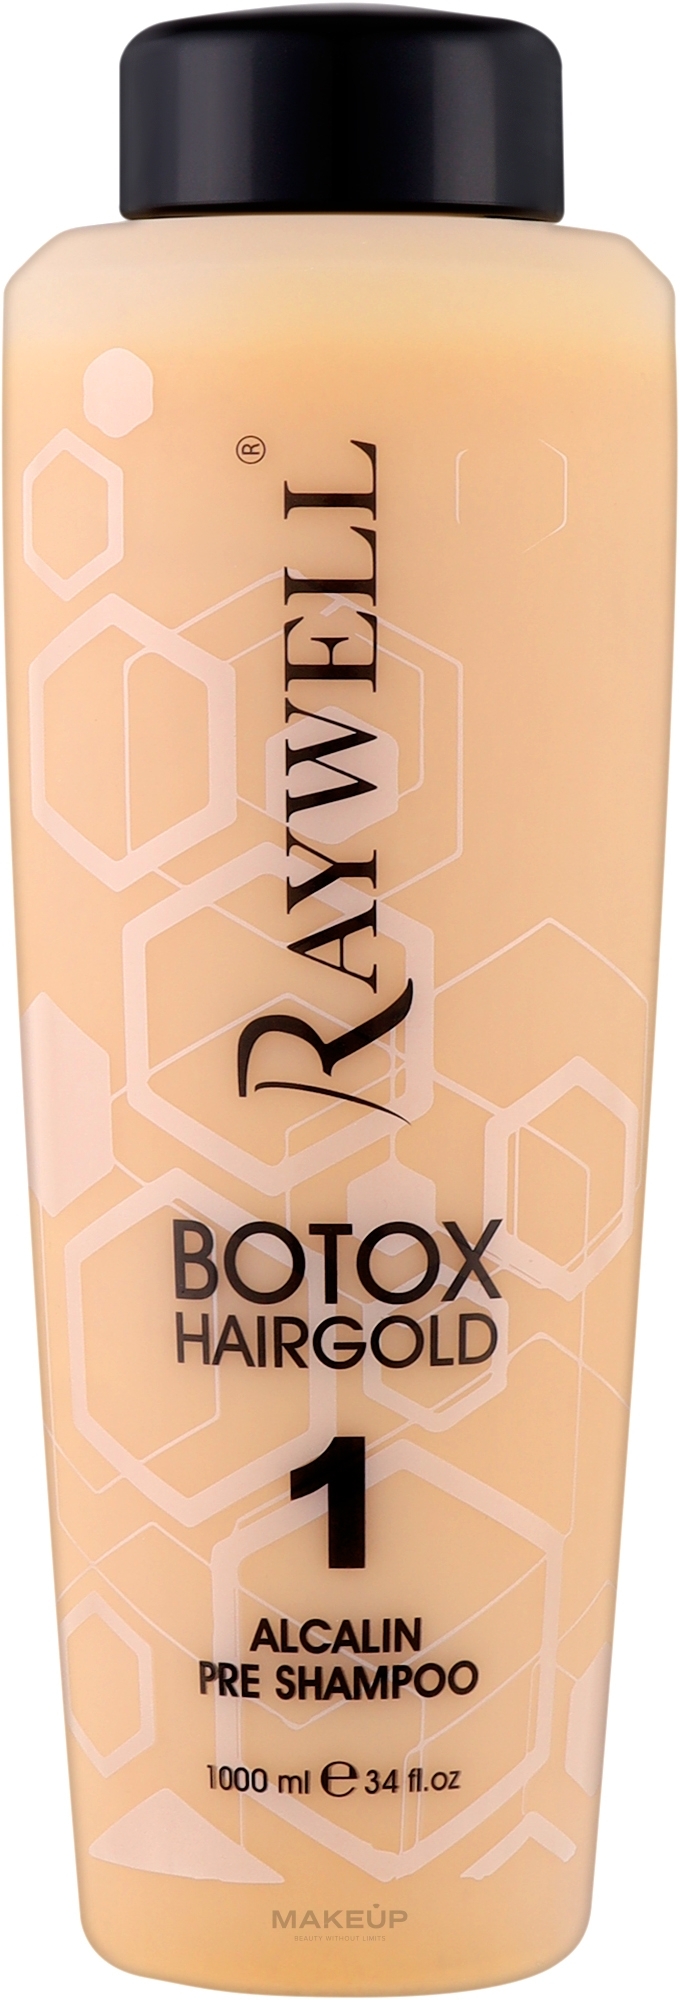 Шампунь для волосся - Raywell Botox Hairgold 1 Alcalin Pre Shampoo — фото 1000ml